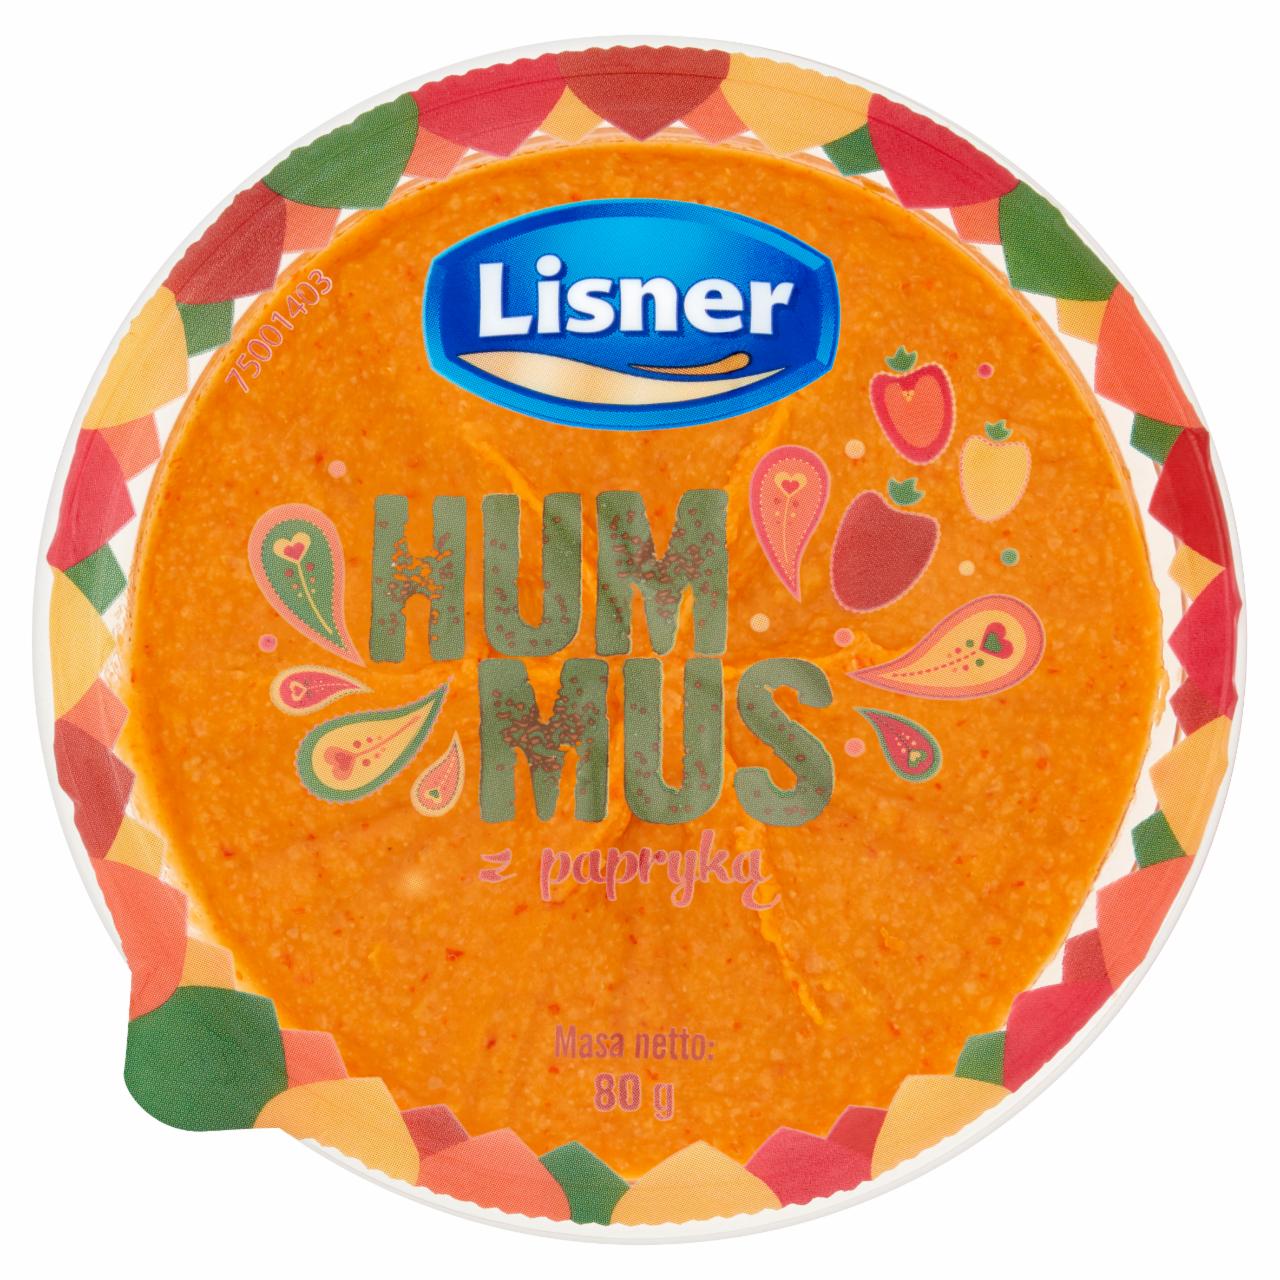 Zdjęcia - Hummus z papryką Lisner